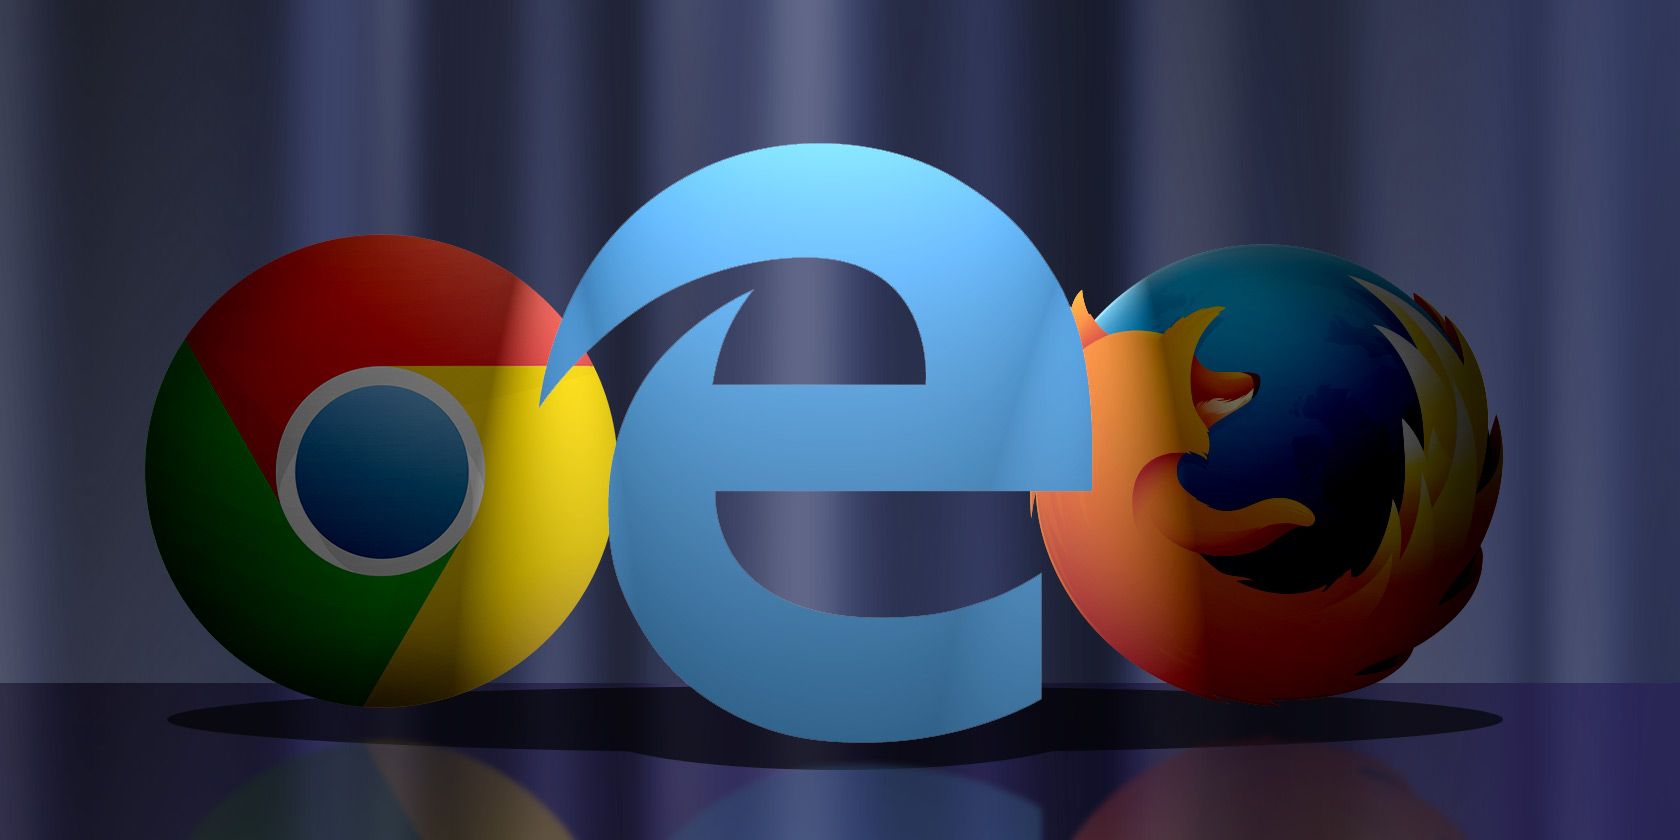 mac web browsers 2015